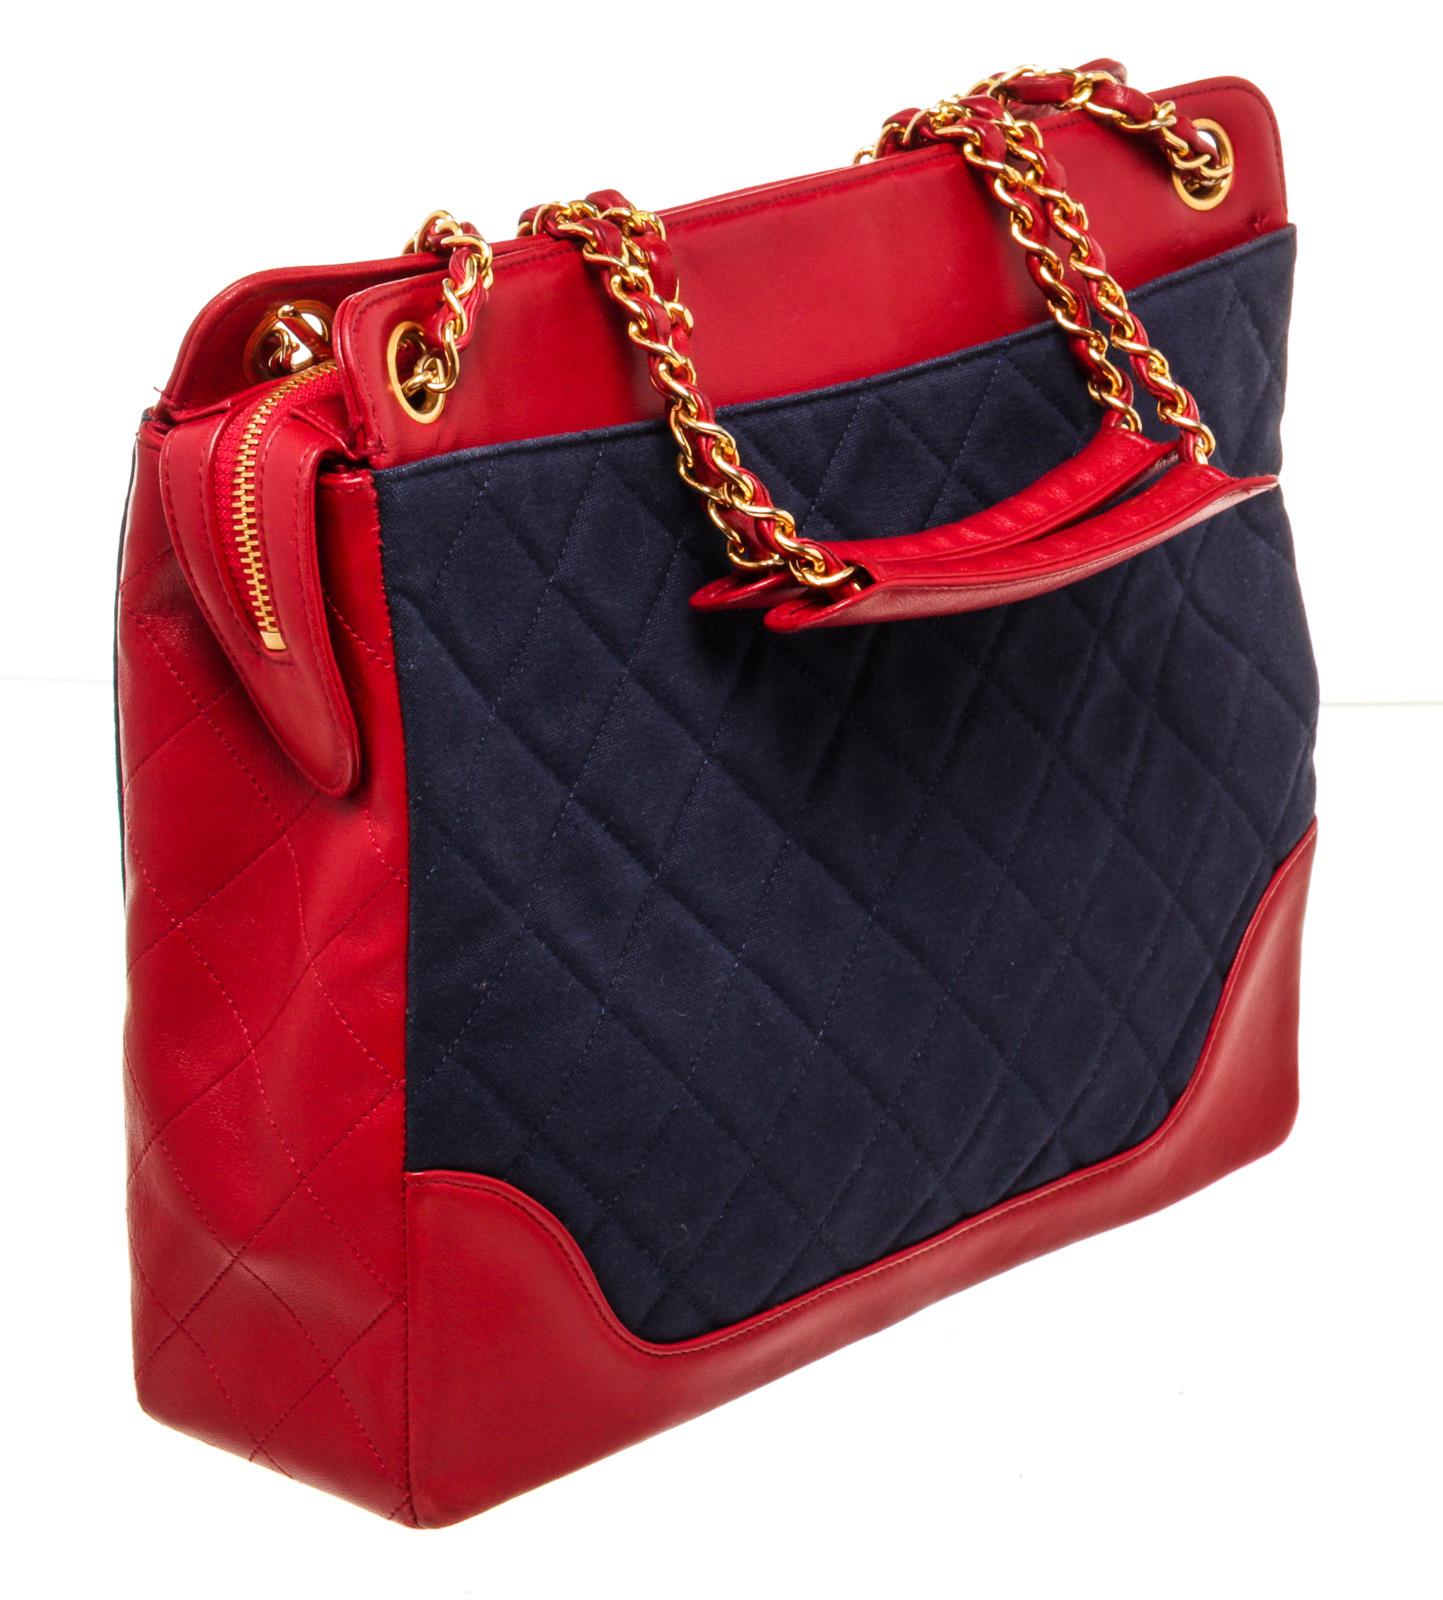 Chanel Red Nevy Denim Canvas Chain Tote Bag with canvas,Â gold-toneÂ hardware, interior zip pocket, chain shoulder strapÂ and snapÂ closure.

42964MSCÂ 